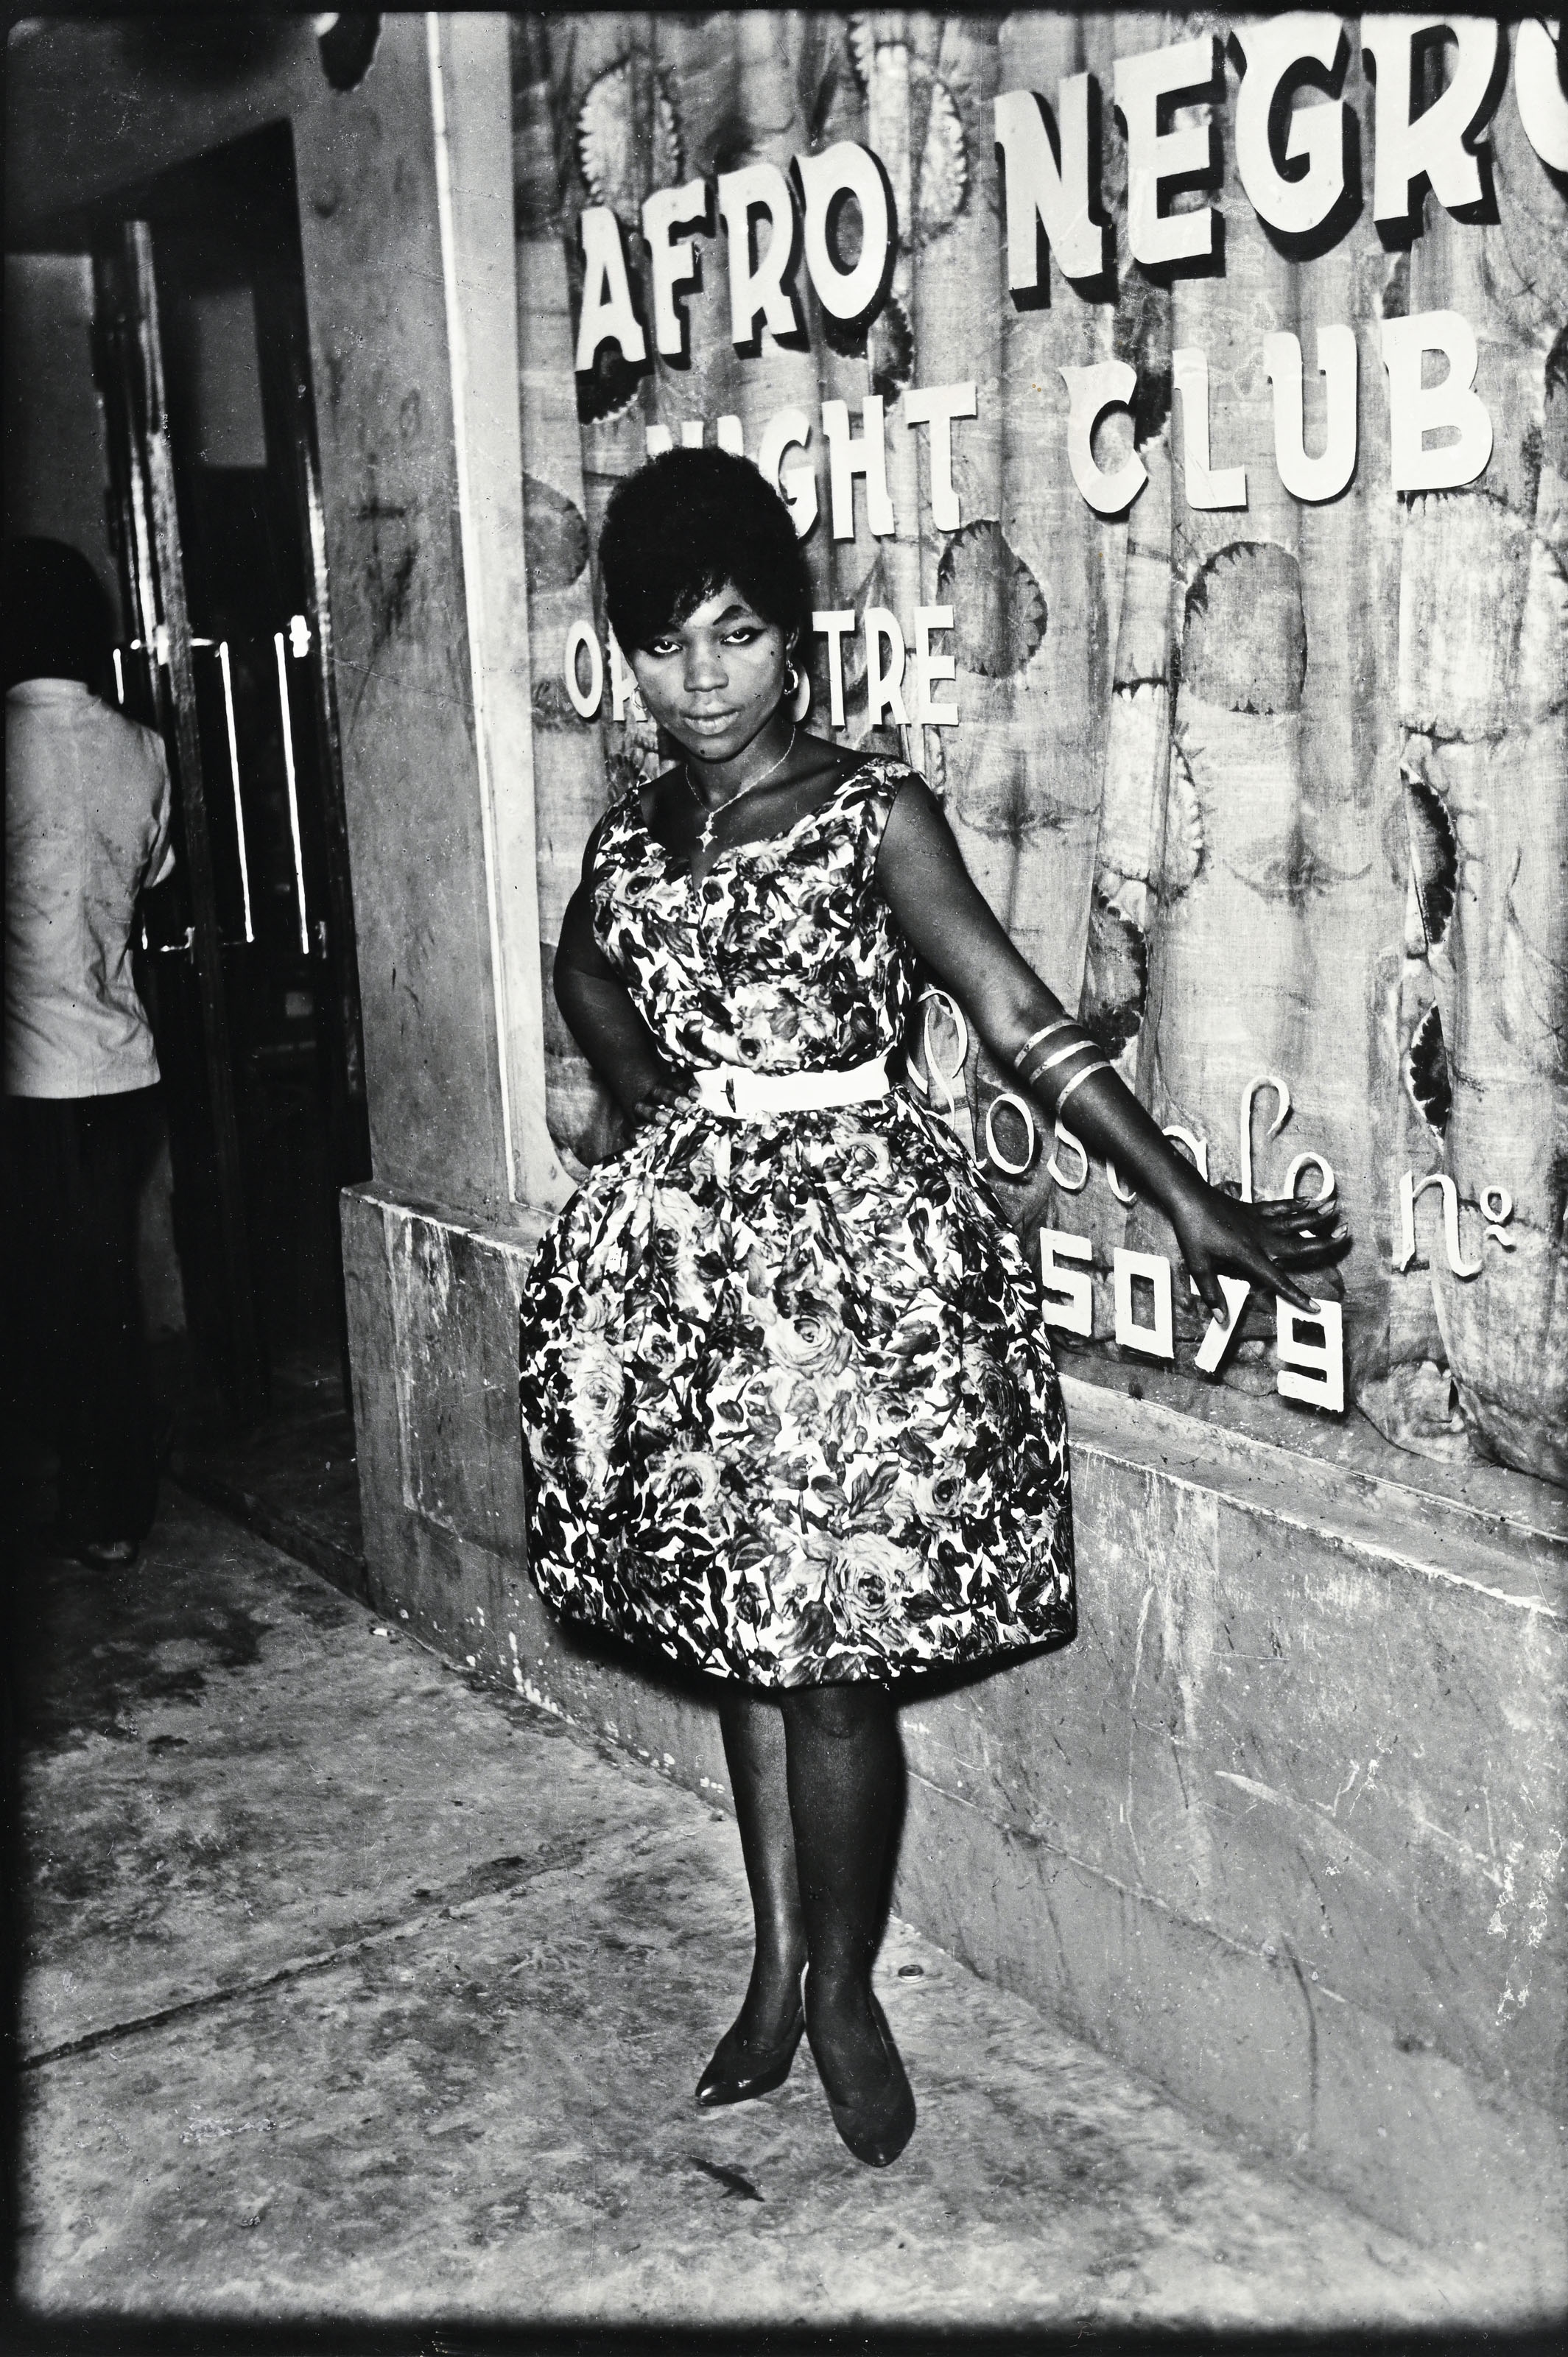 "Devant l'Afro Negro, 1965" - Jean Depara